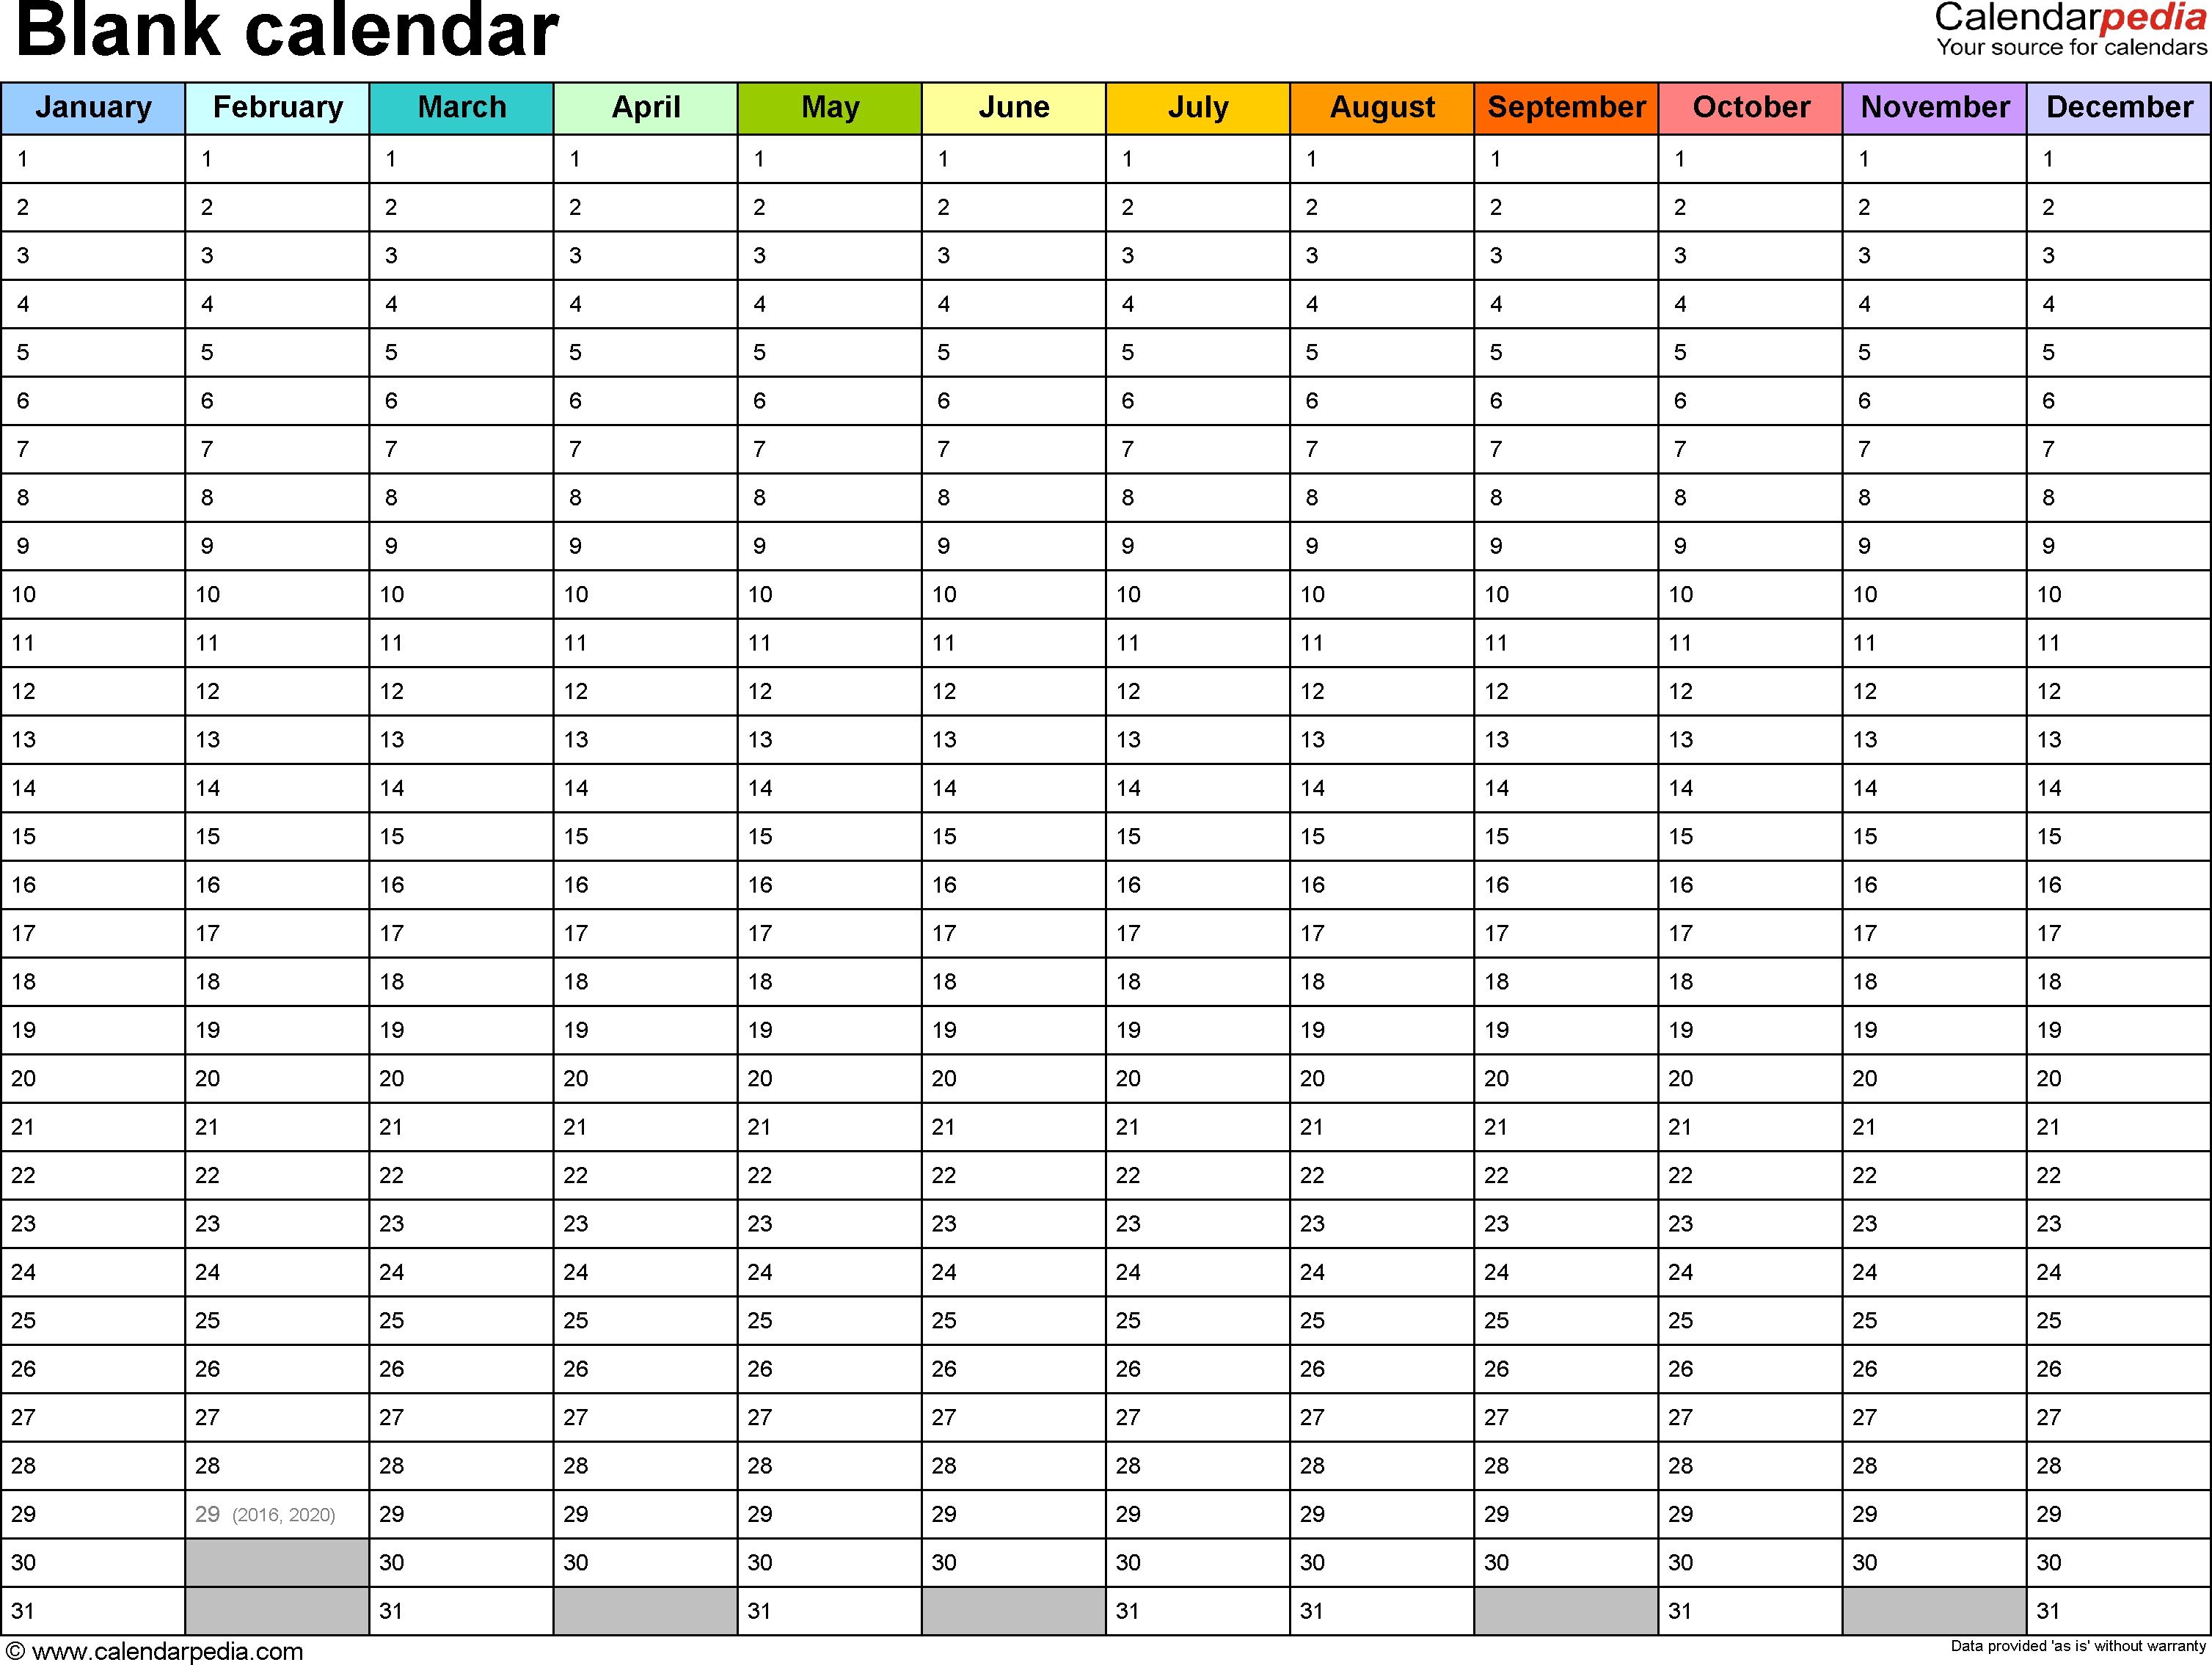 Blank Calendar - 9 Free Printable Microsoft Word Templates Calendar Blank Template Word